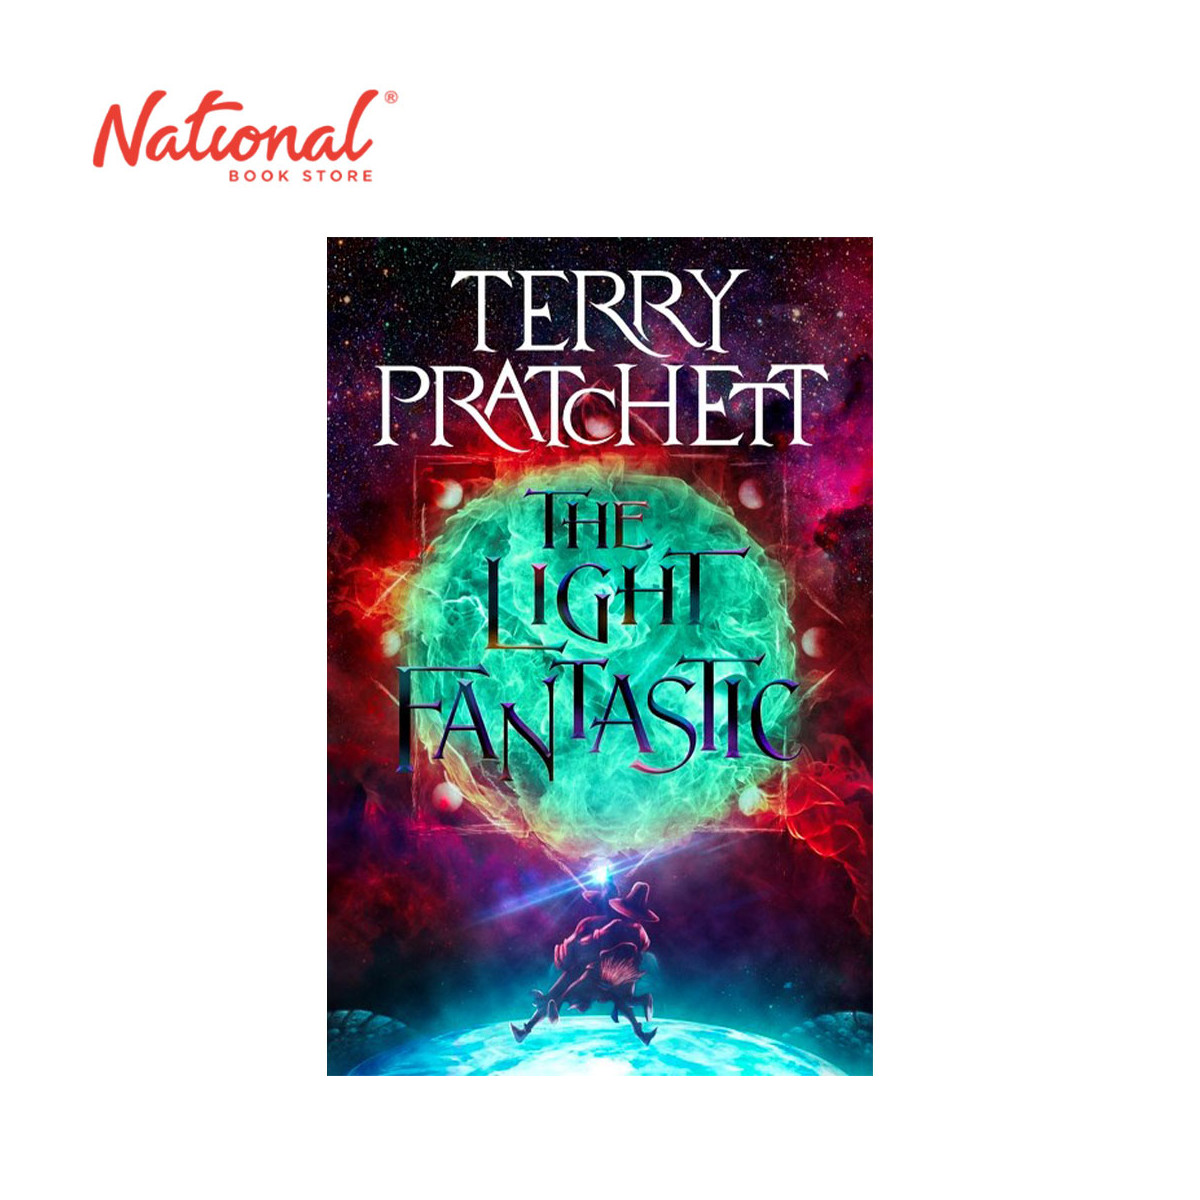 *PRE-ORDER* The Light Fantastic by Terry Pratchett - Trade Paperback - Sci-Fi, Fantasy & Horror